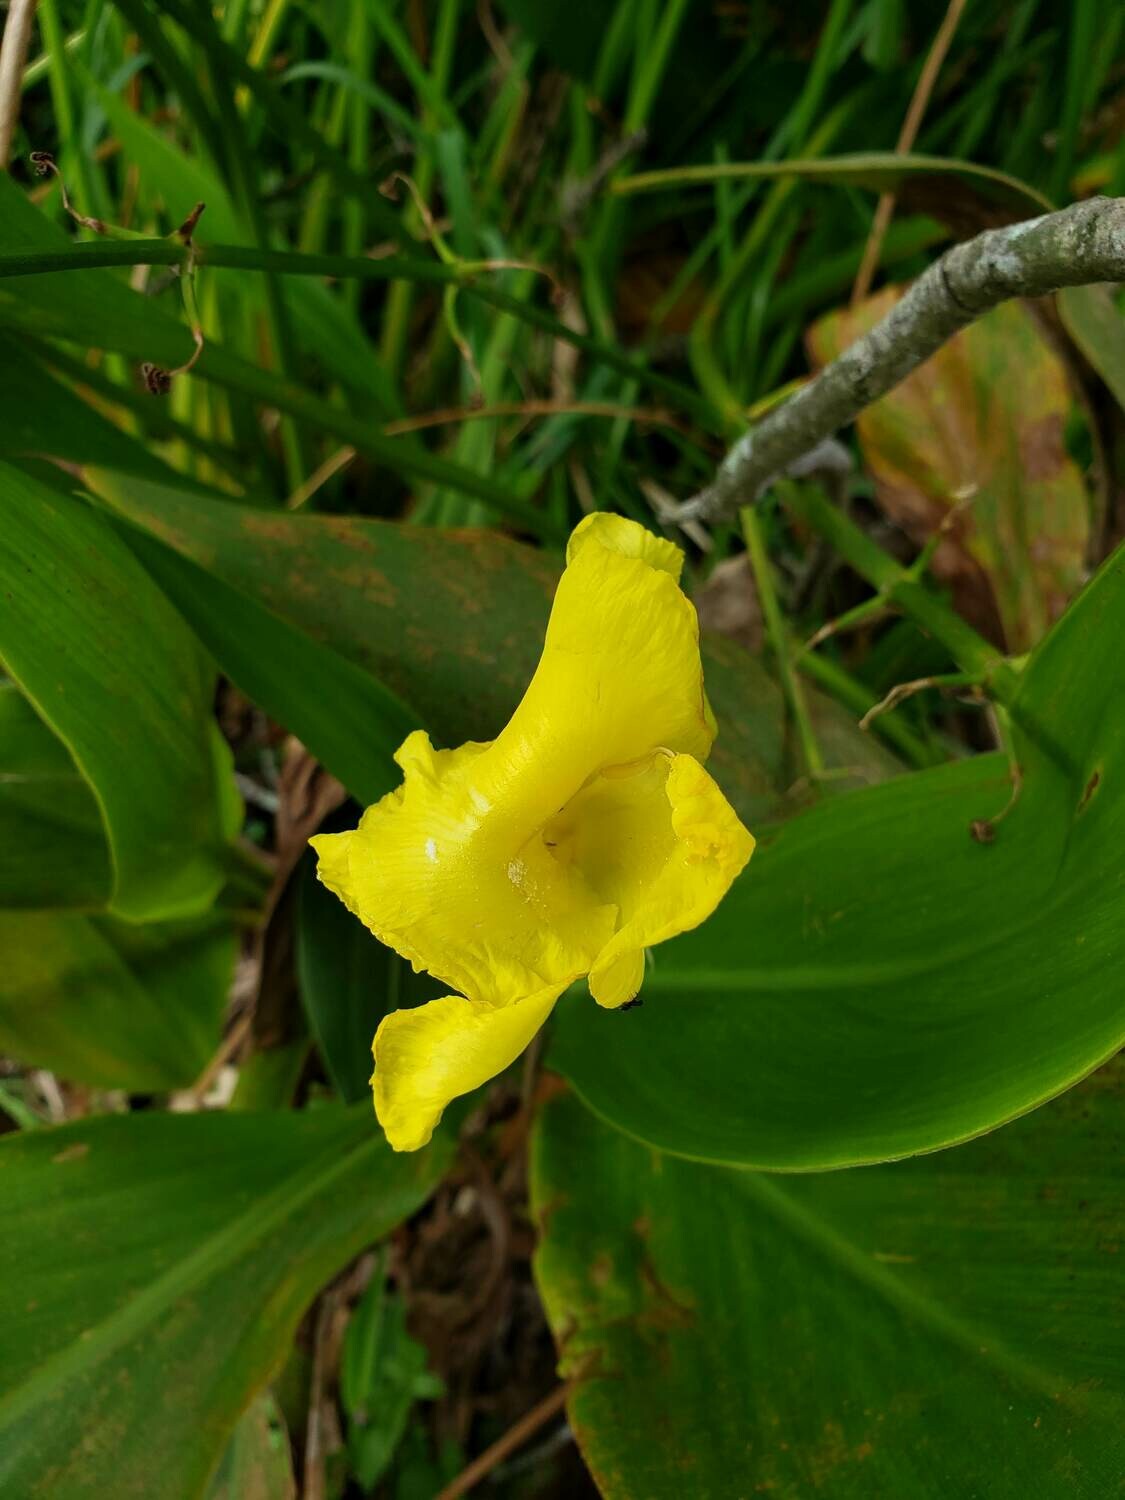 canna flaccida " yellow canna"  flower  host plant for canna skipper butterfly